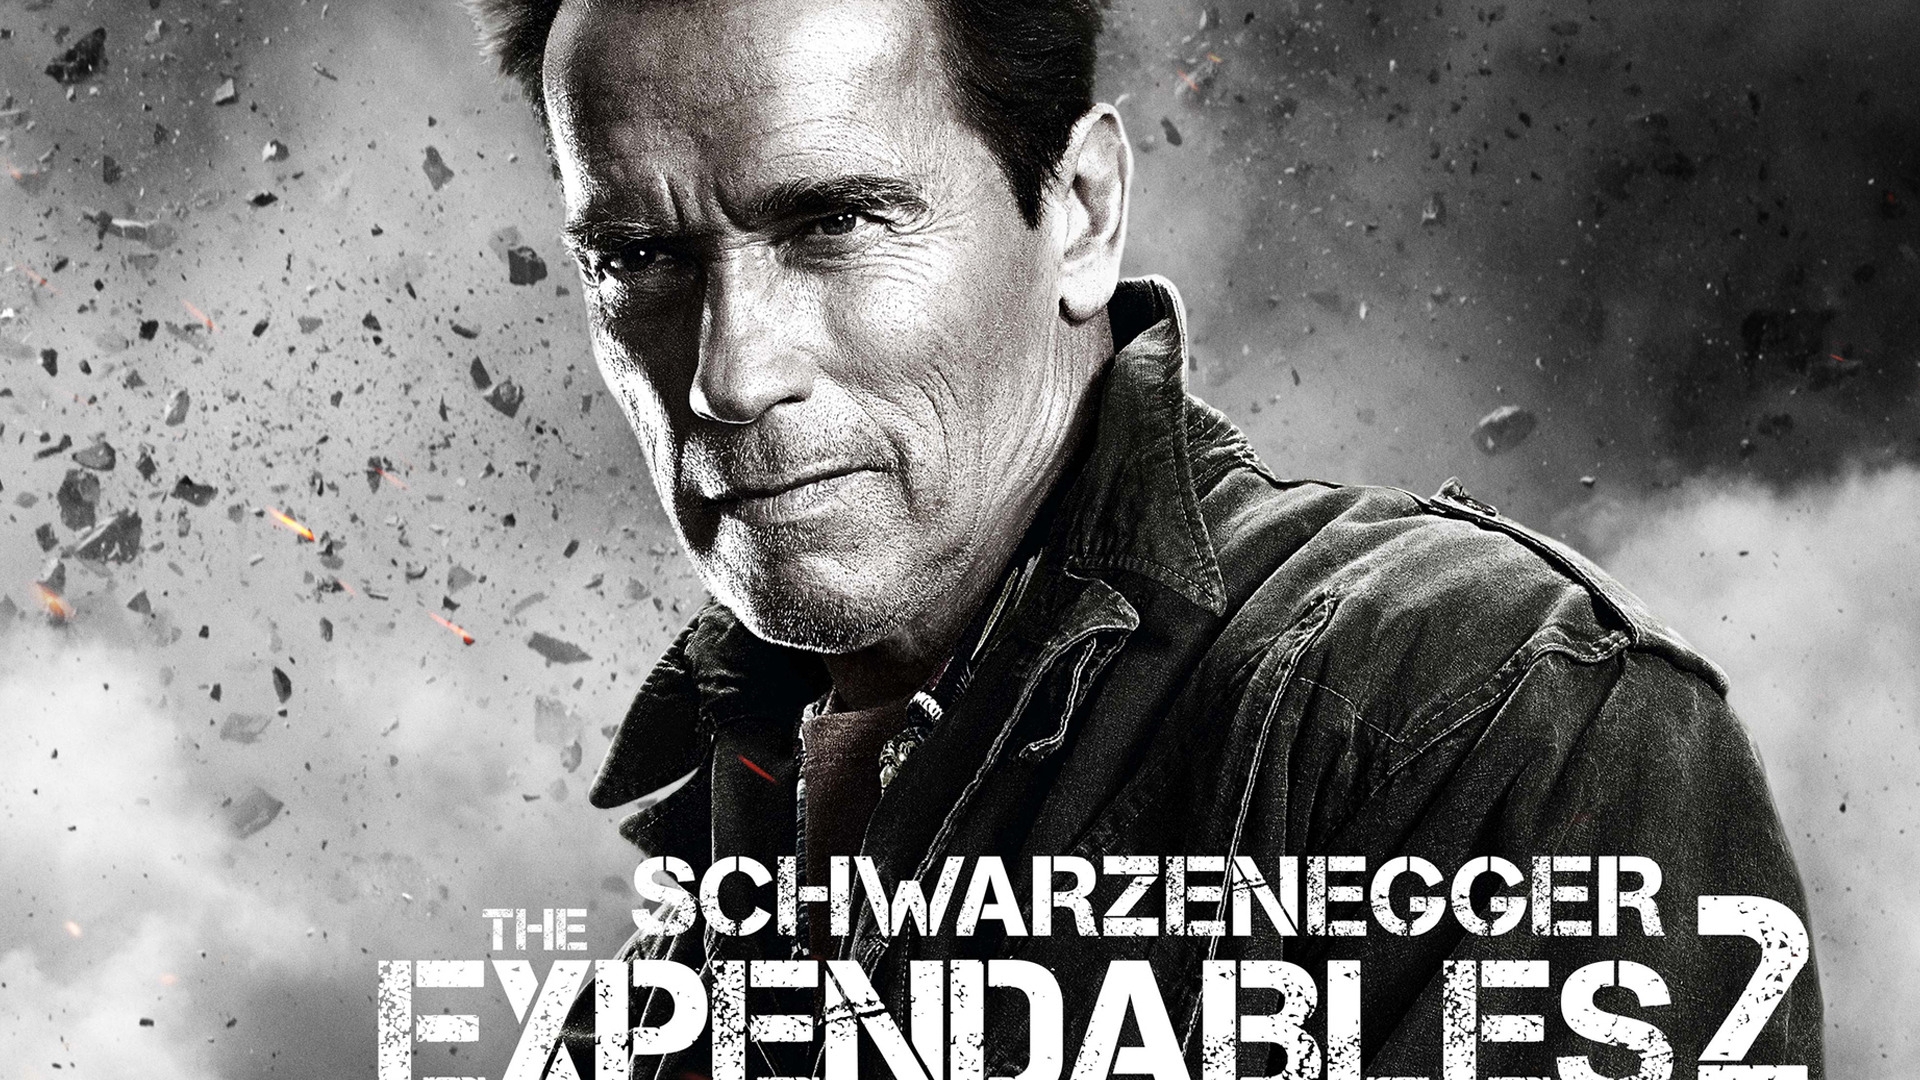 Arnold Schwarzenegger Expendables 2 for 1920 x 1080 HDTV 1080p resolution